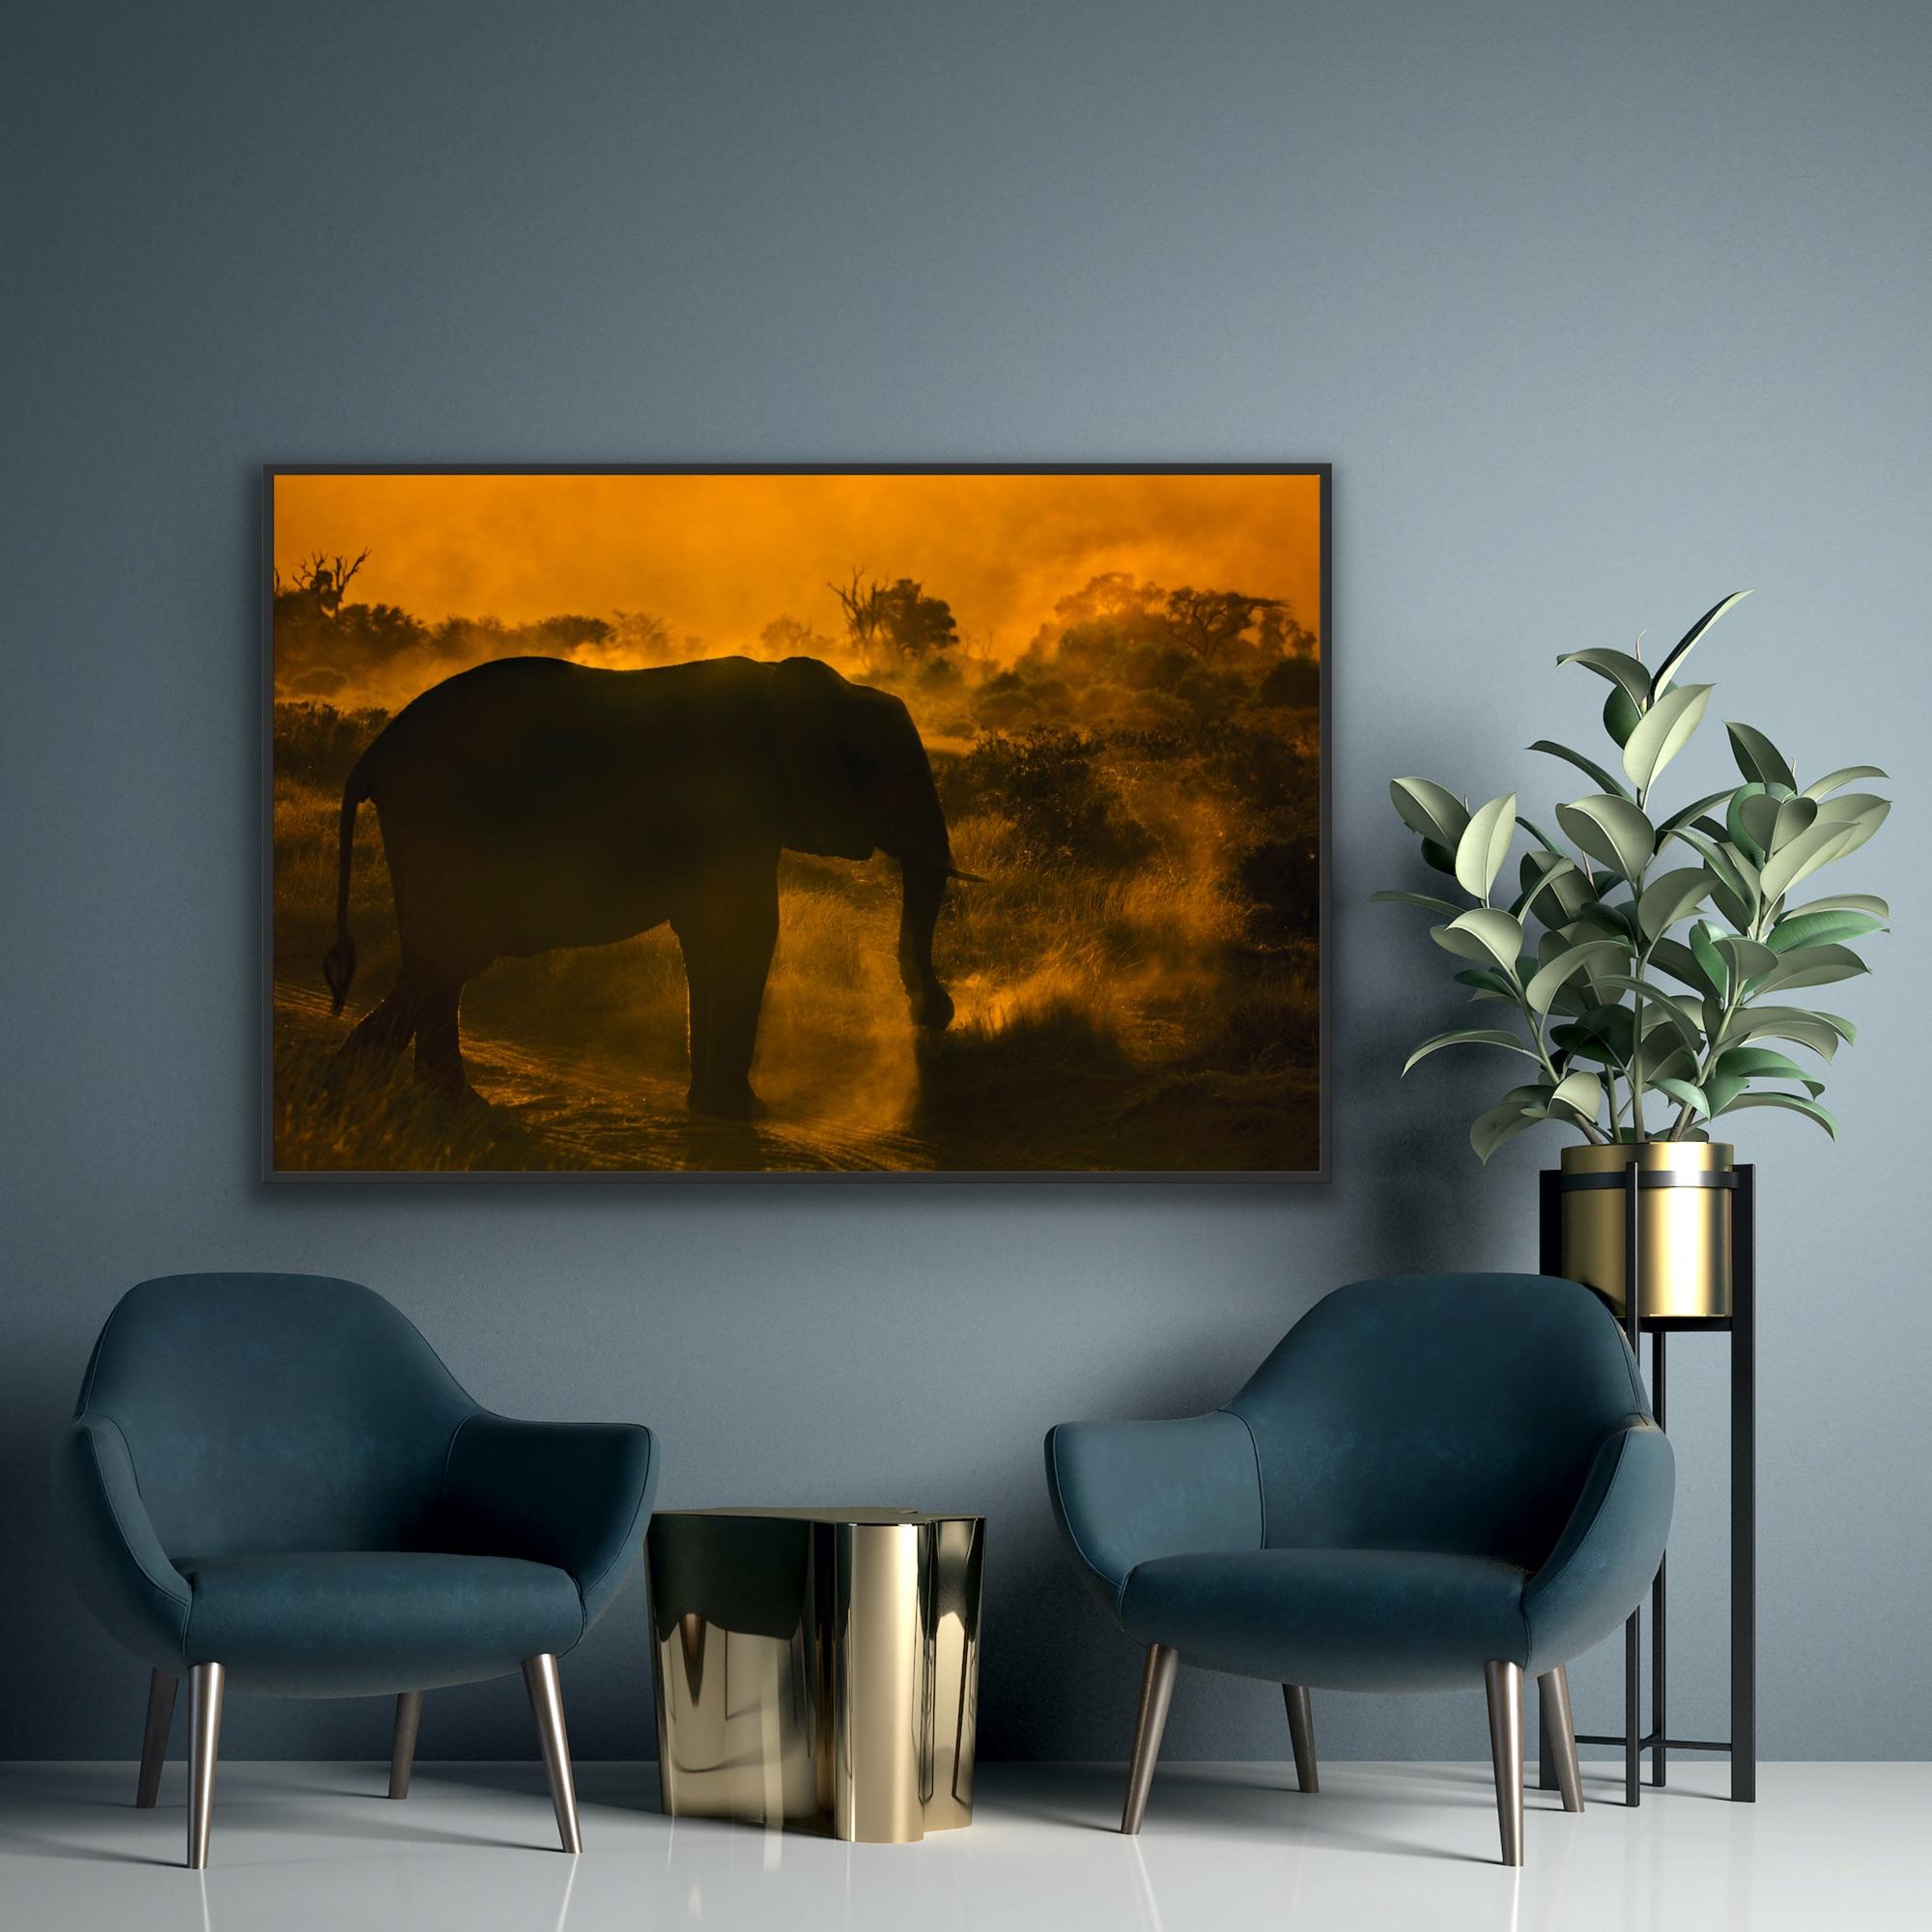  Landscape Large Photograph Nature Elephant Wildlife Africa Orange Trees Sunset - Black Animal Print by Aditya Dicky Singh